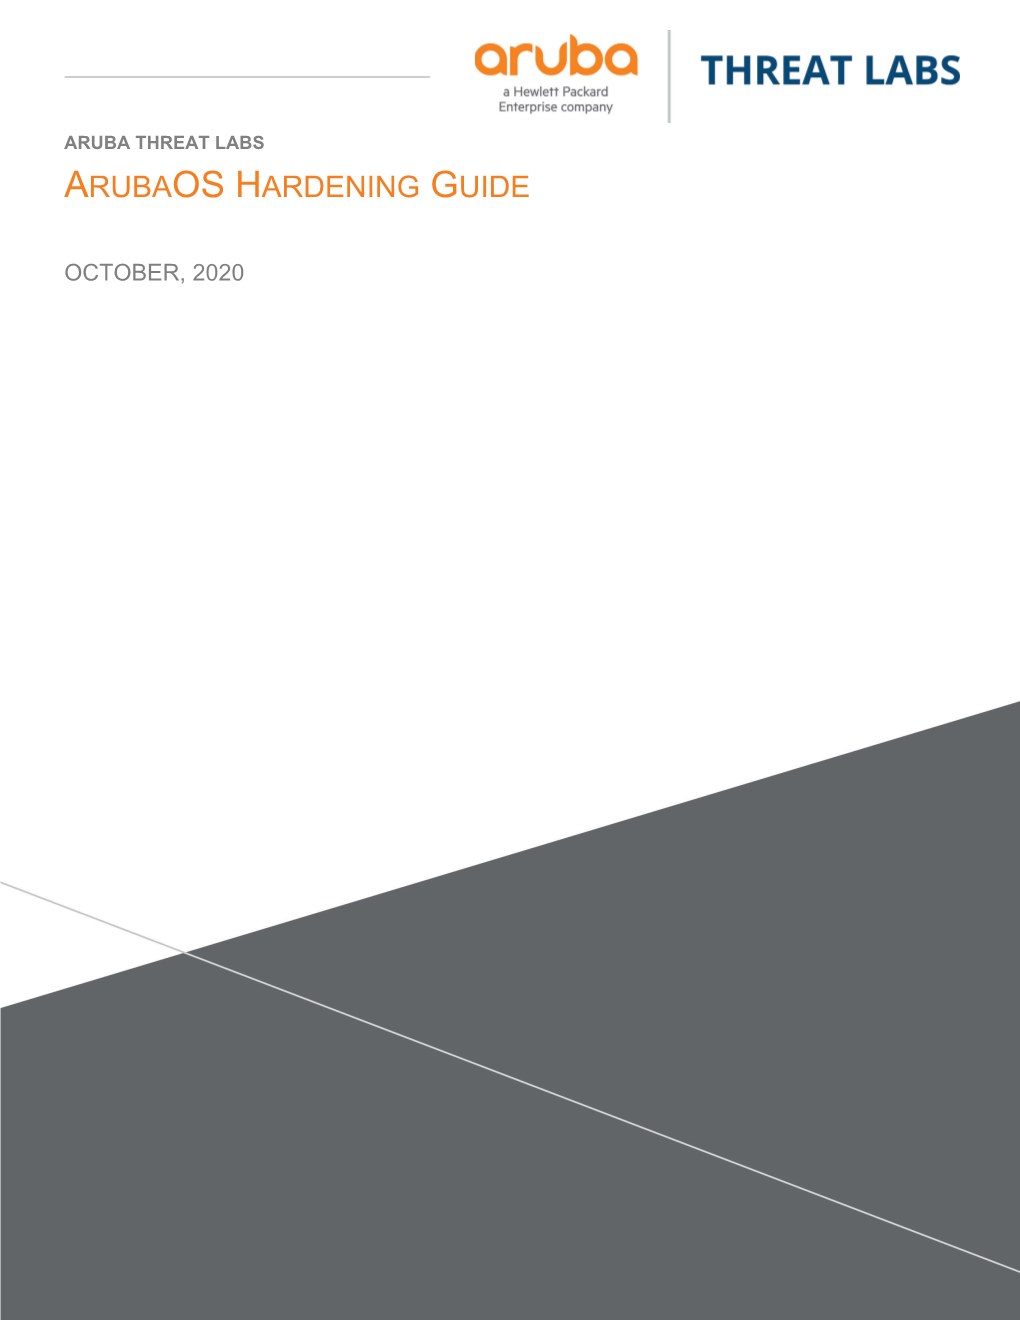 Arubaos Hardening Guide